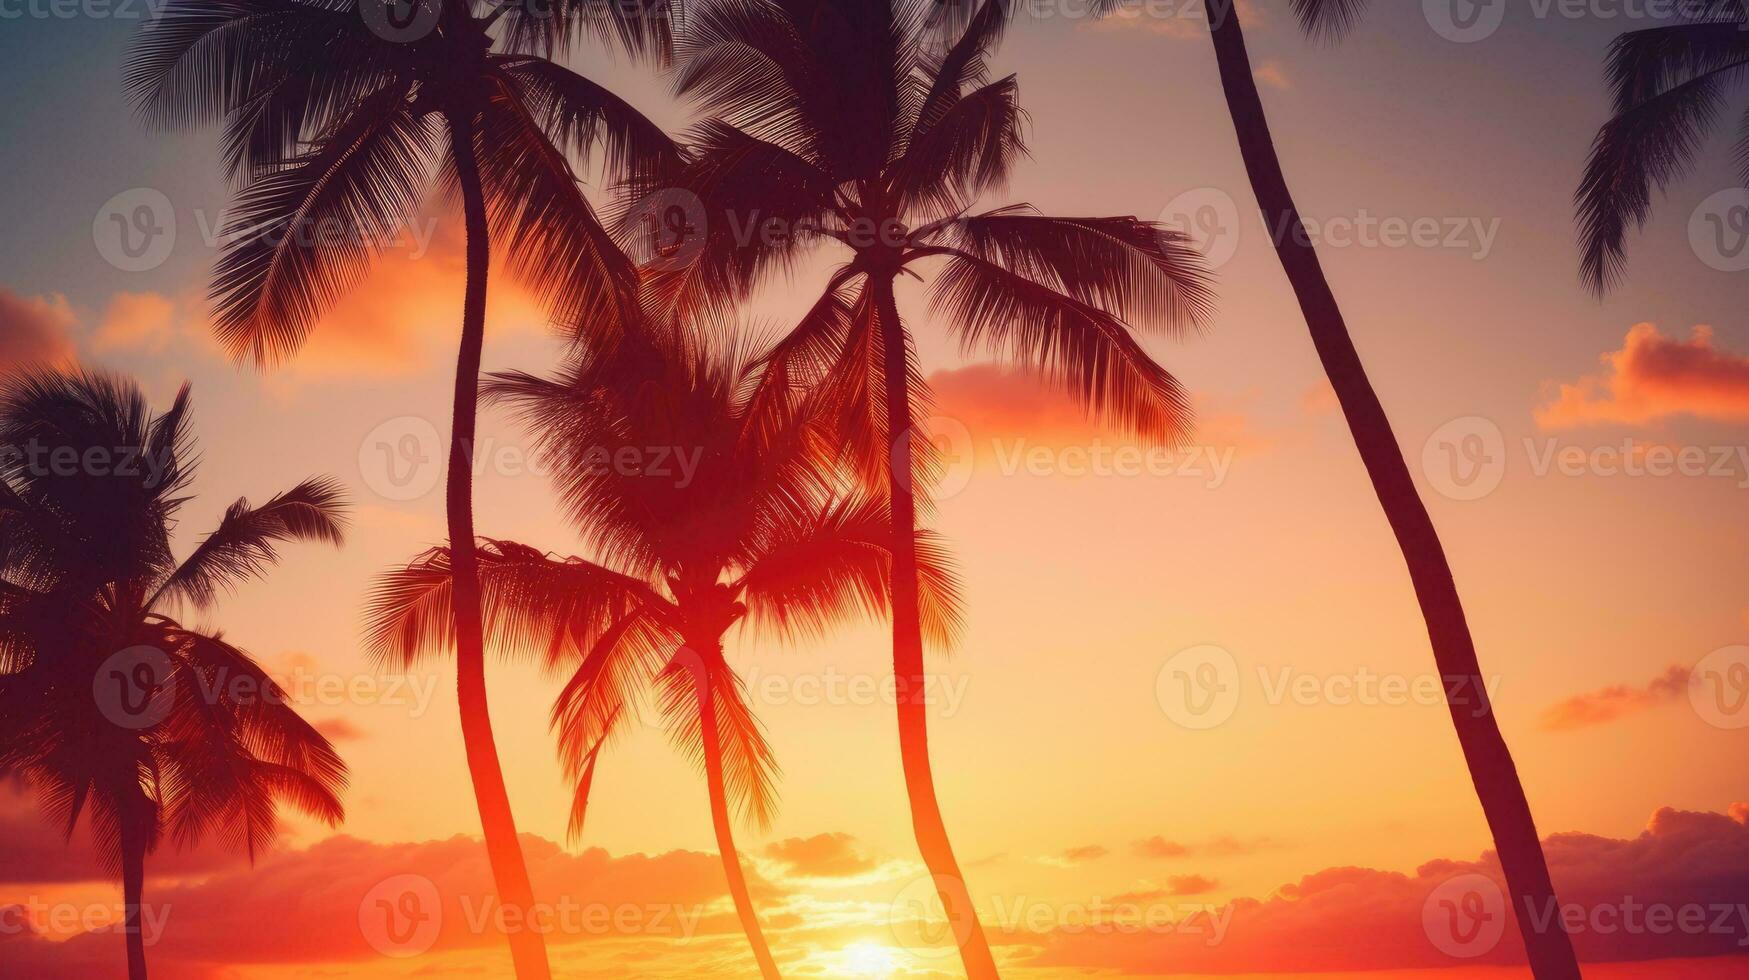 Jahrgang Ton und Bokeh Beleuchtung verbessern das Sonnenuntergang Ferien Szene mit Palme Bäume foto